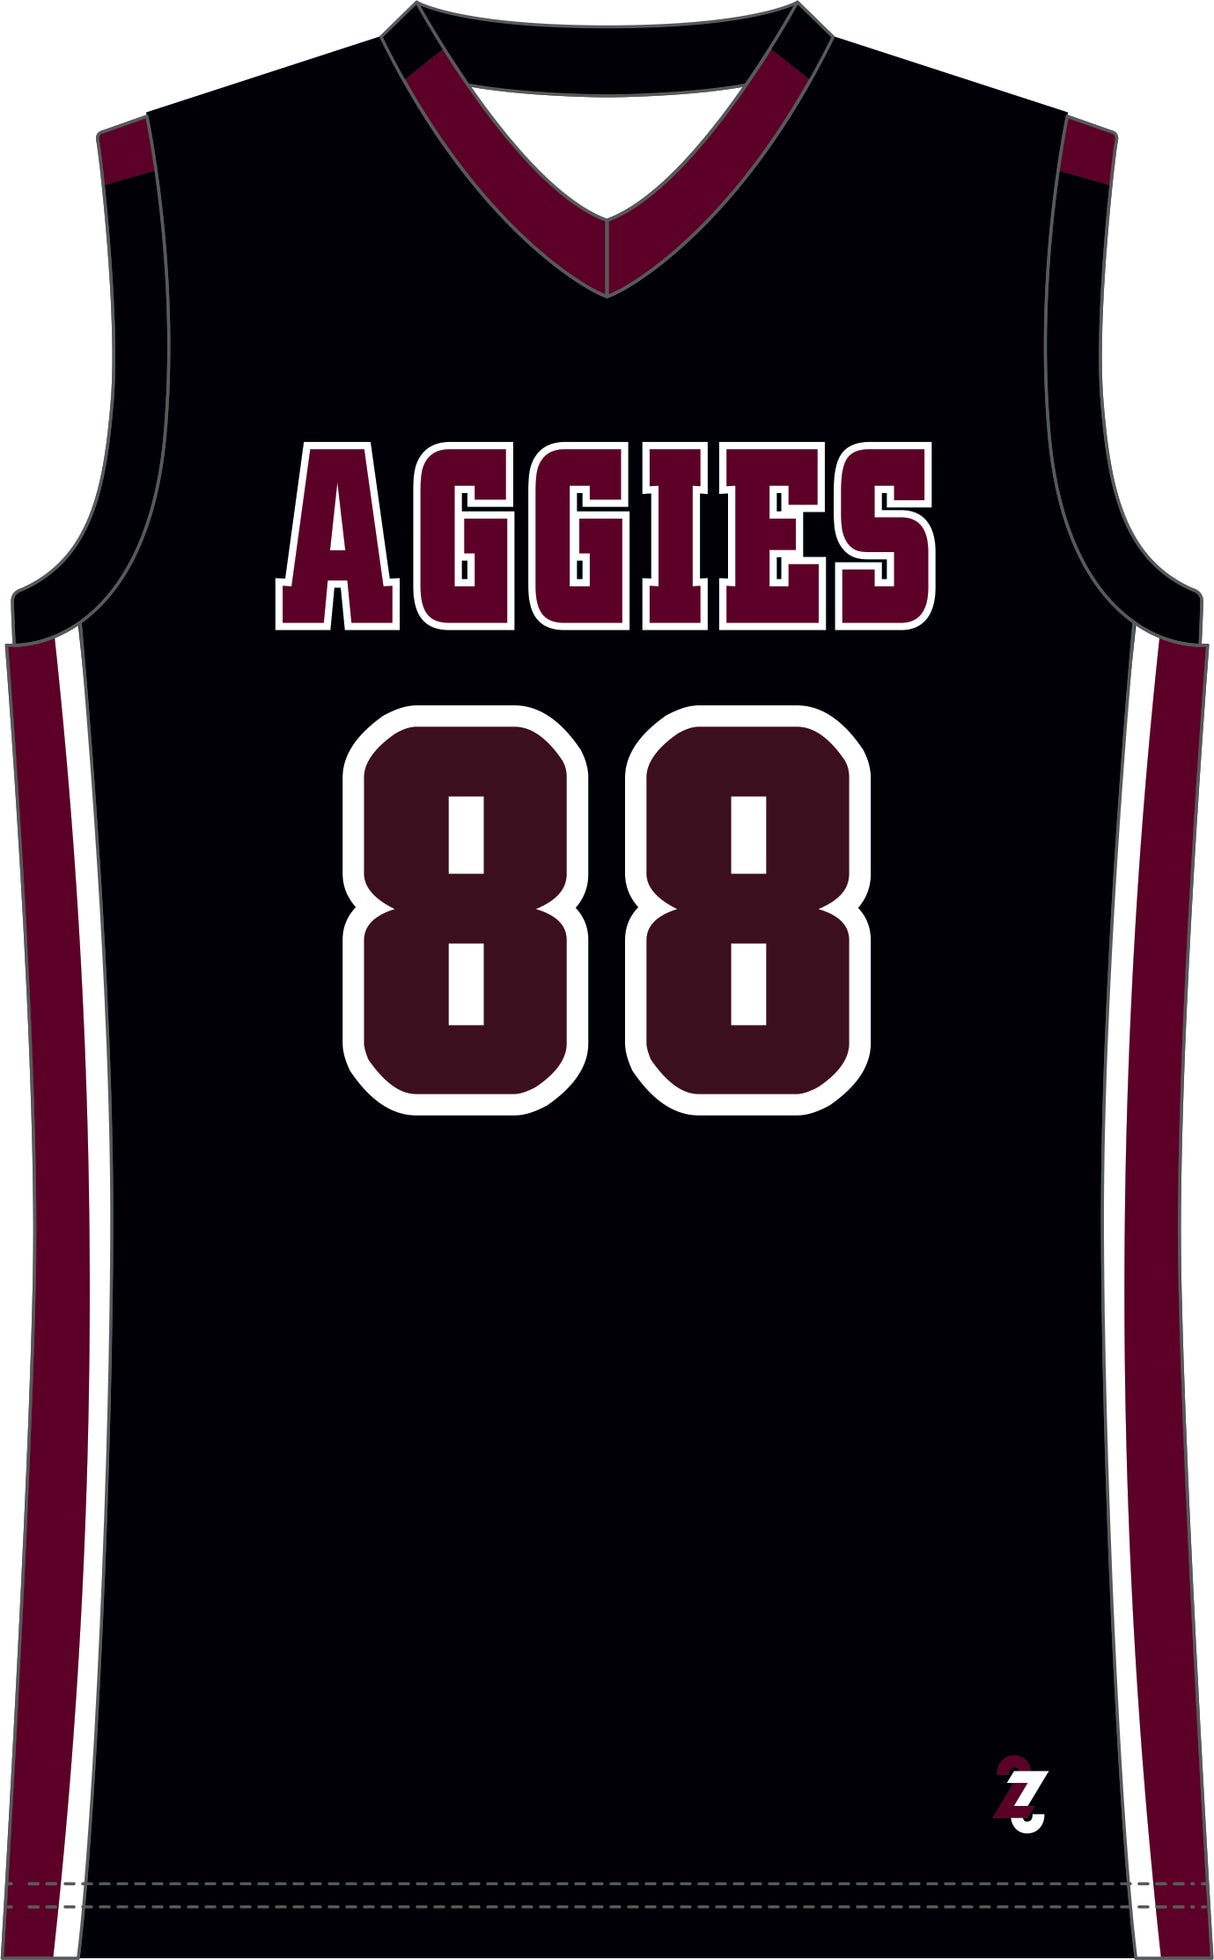 Aggies Basketball #88 Replica Jersey